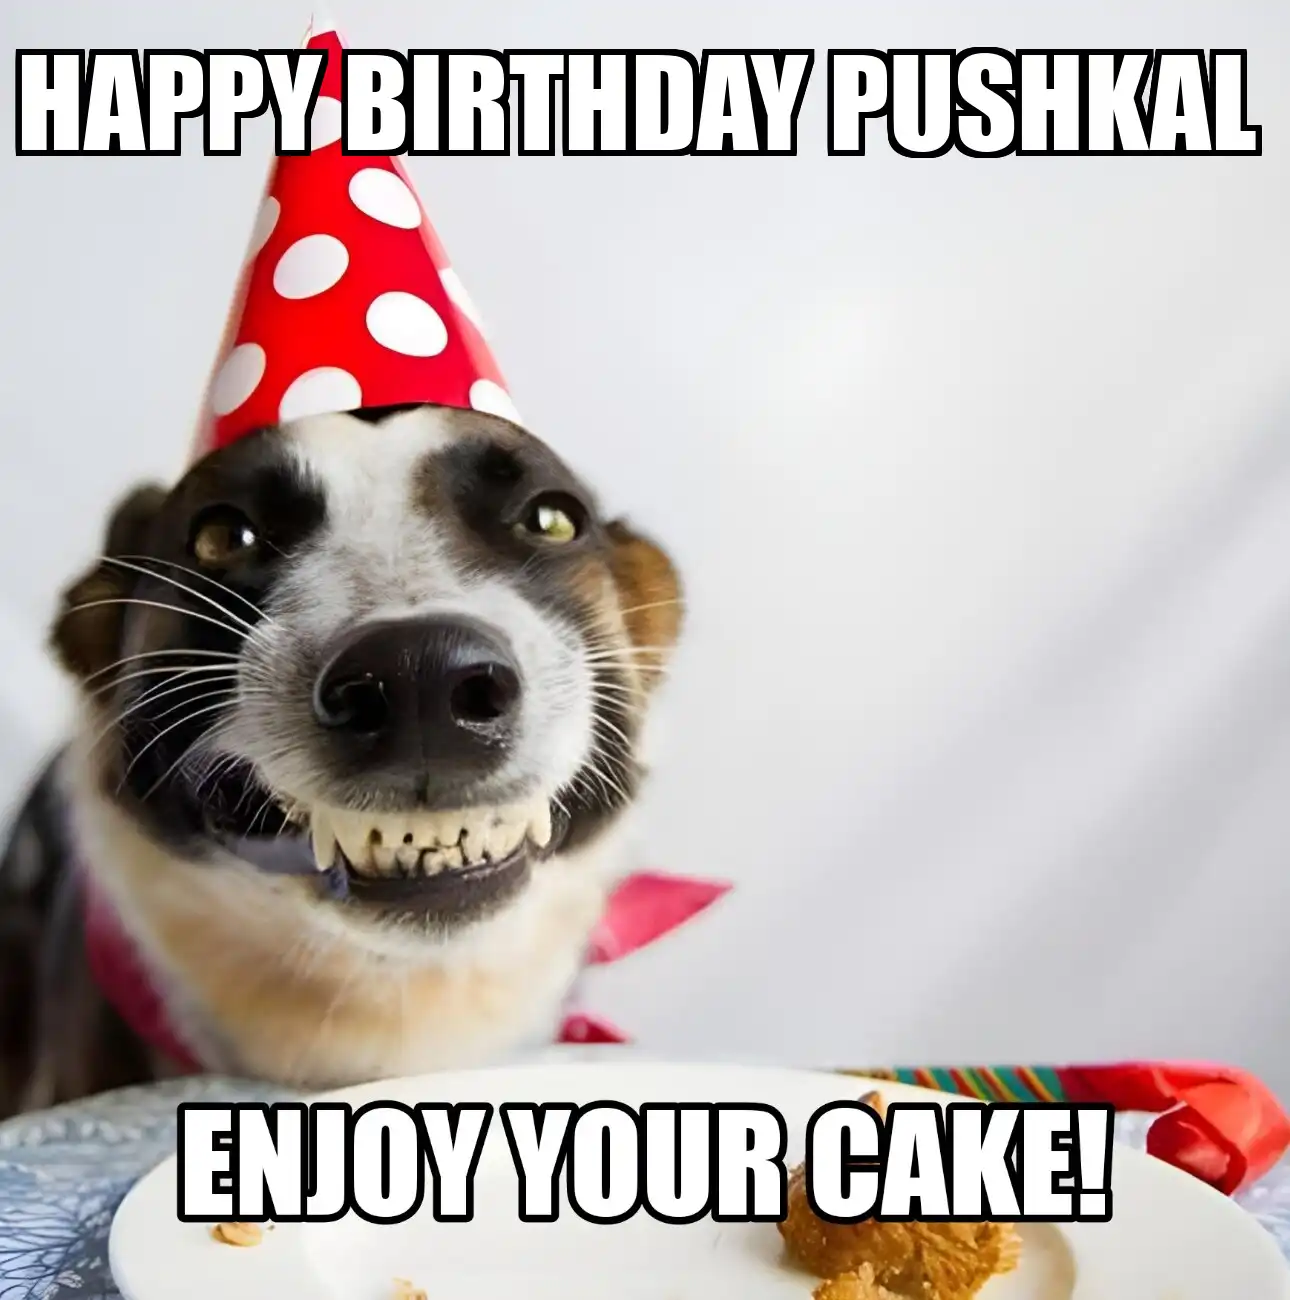 Happy Birthday Pushkal Enjoy Your Cake Dog Meme